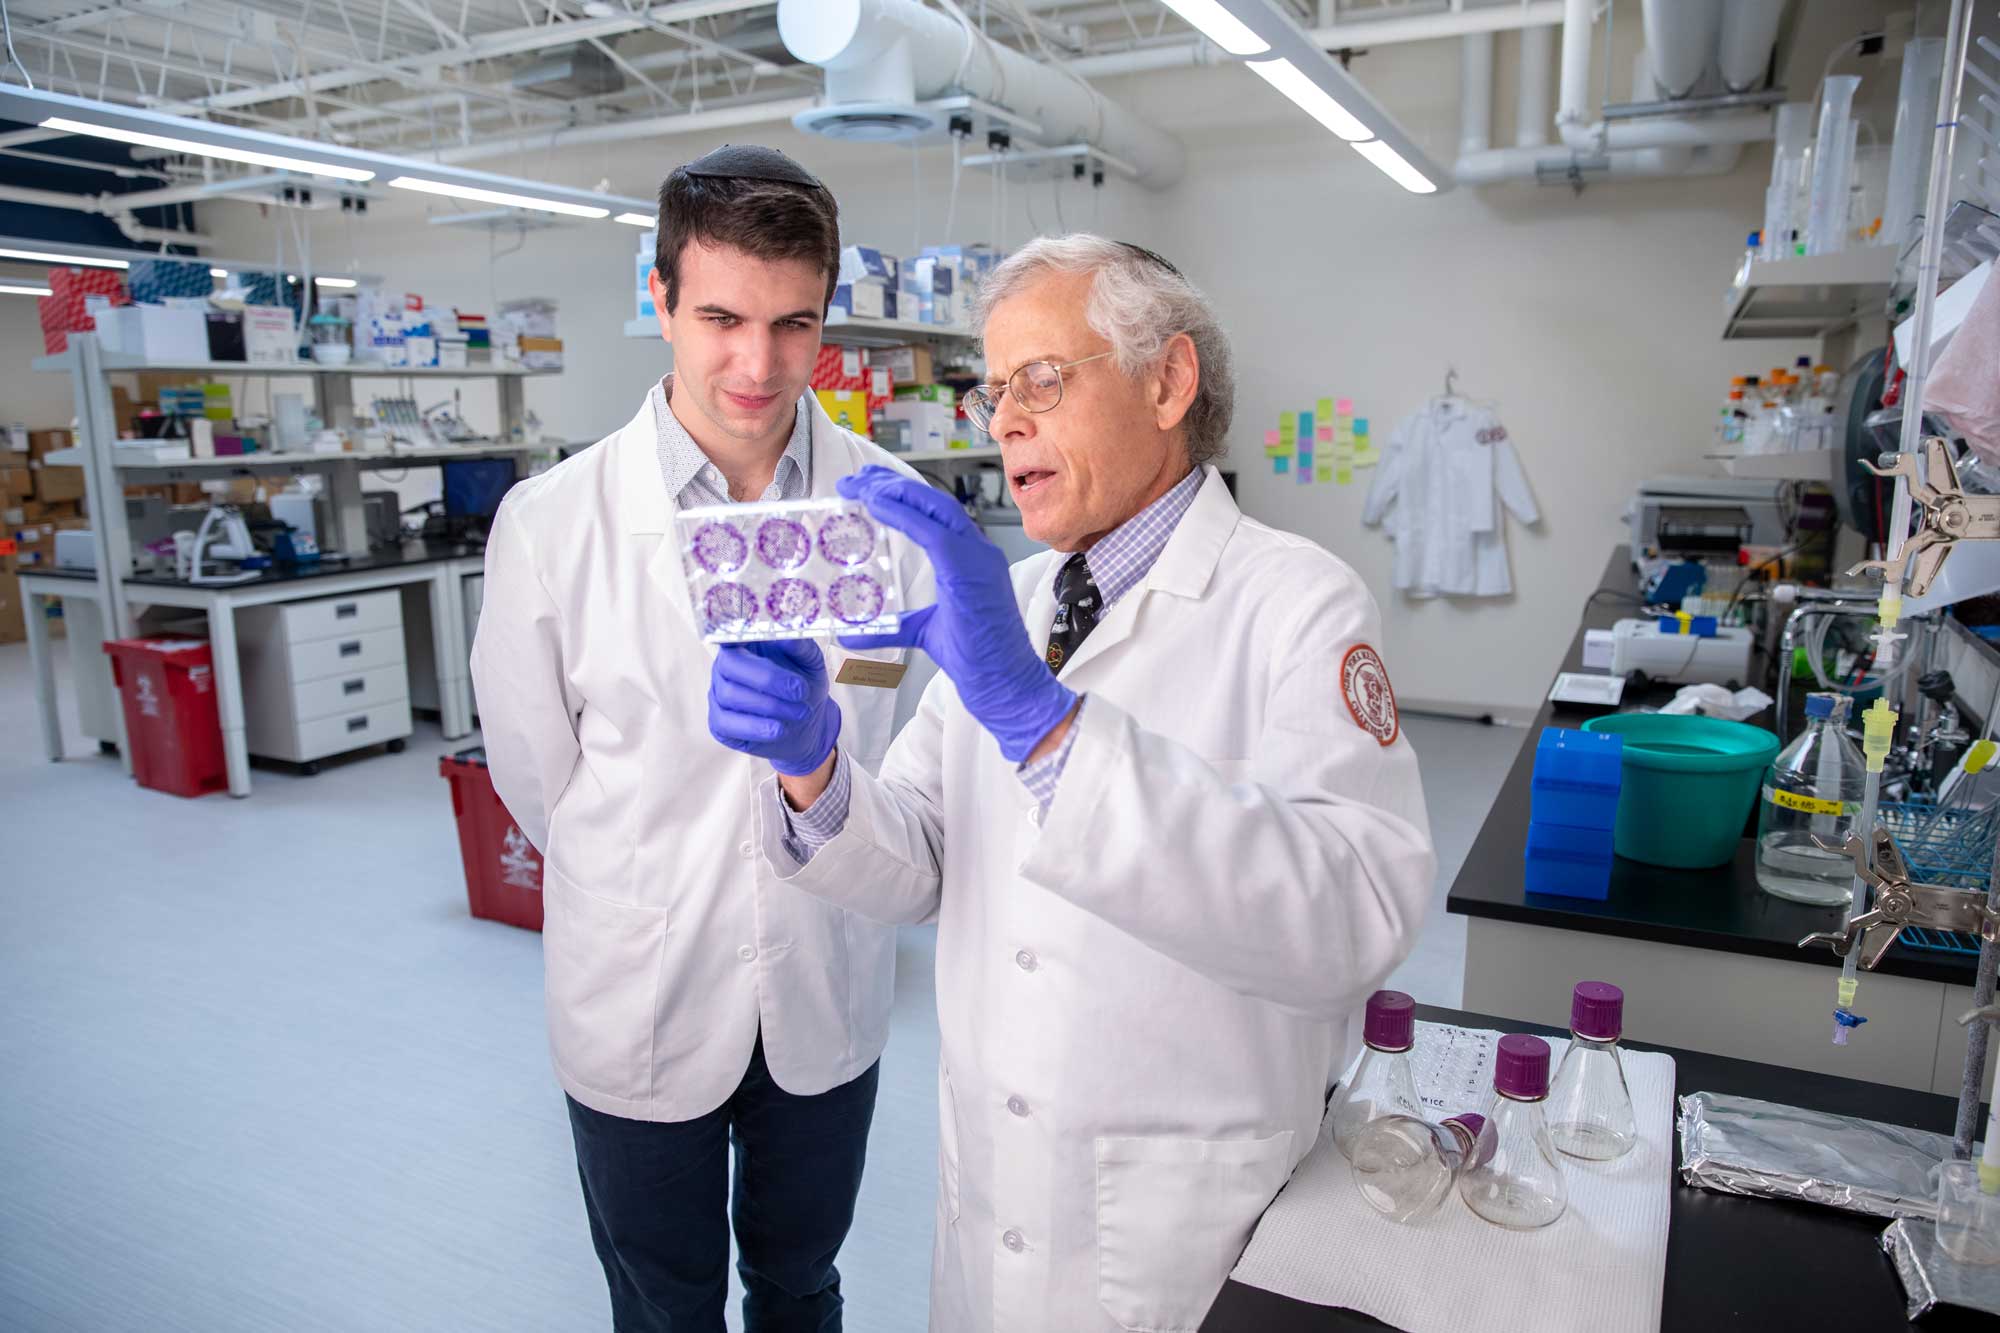 Moshe Serwatien learns from faculty member in NYMC medical lab